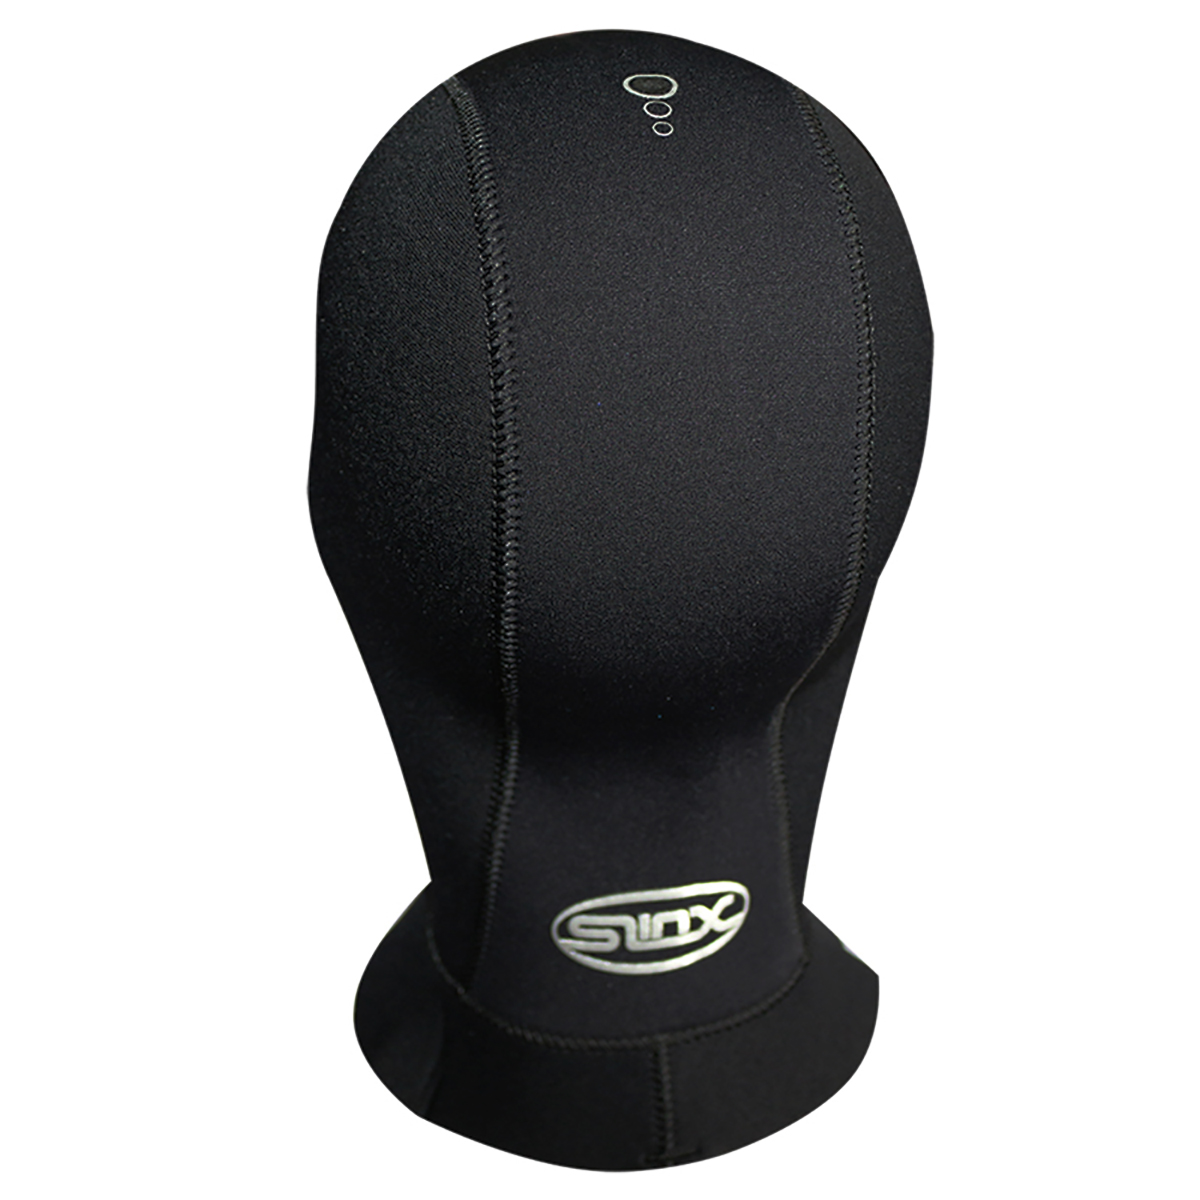 5mm-Neoprene-Scuba-Diving-Hood-Mask-Warm-Water-Sports-Swimming-Hat-Wetsuit-Cap-Head-Cover-1469143